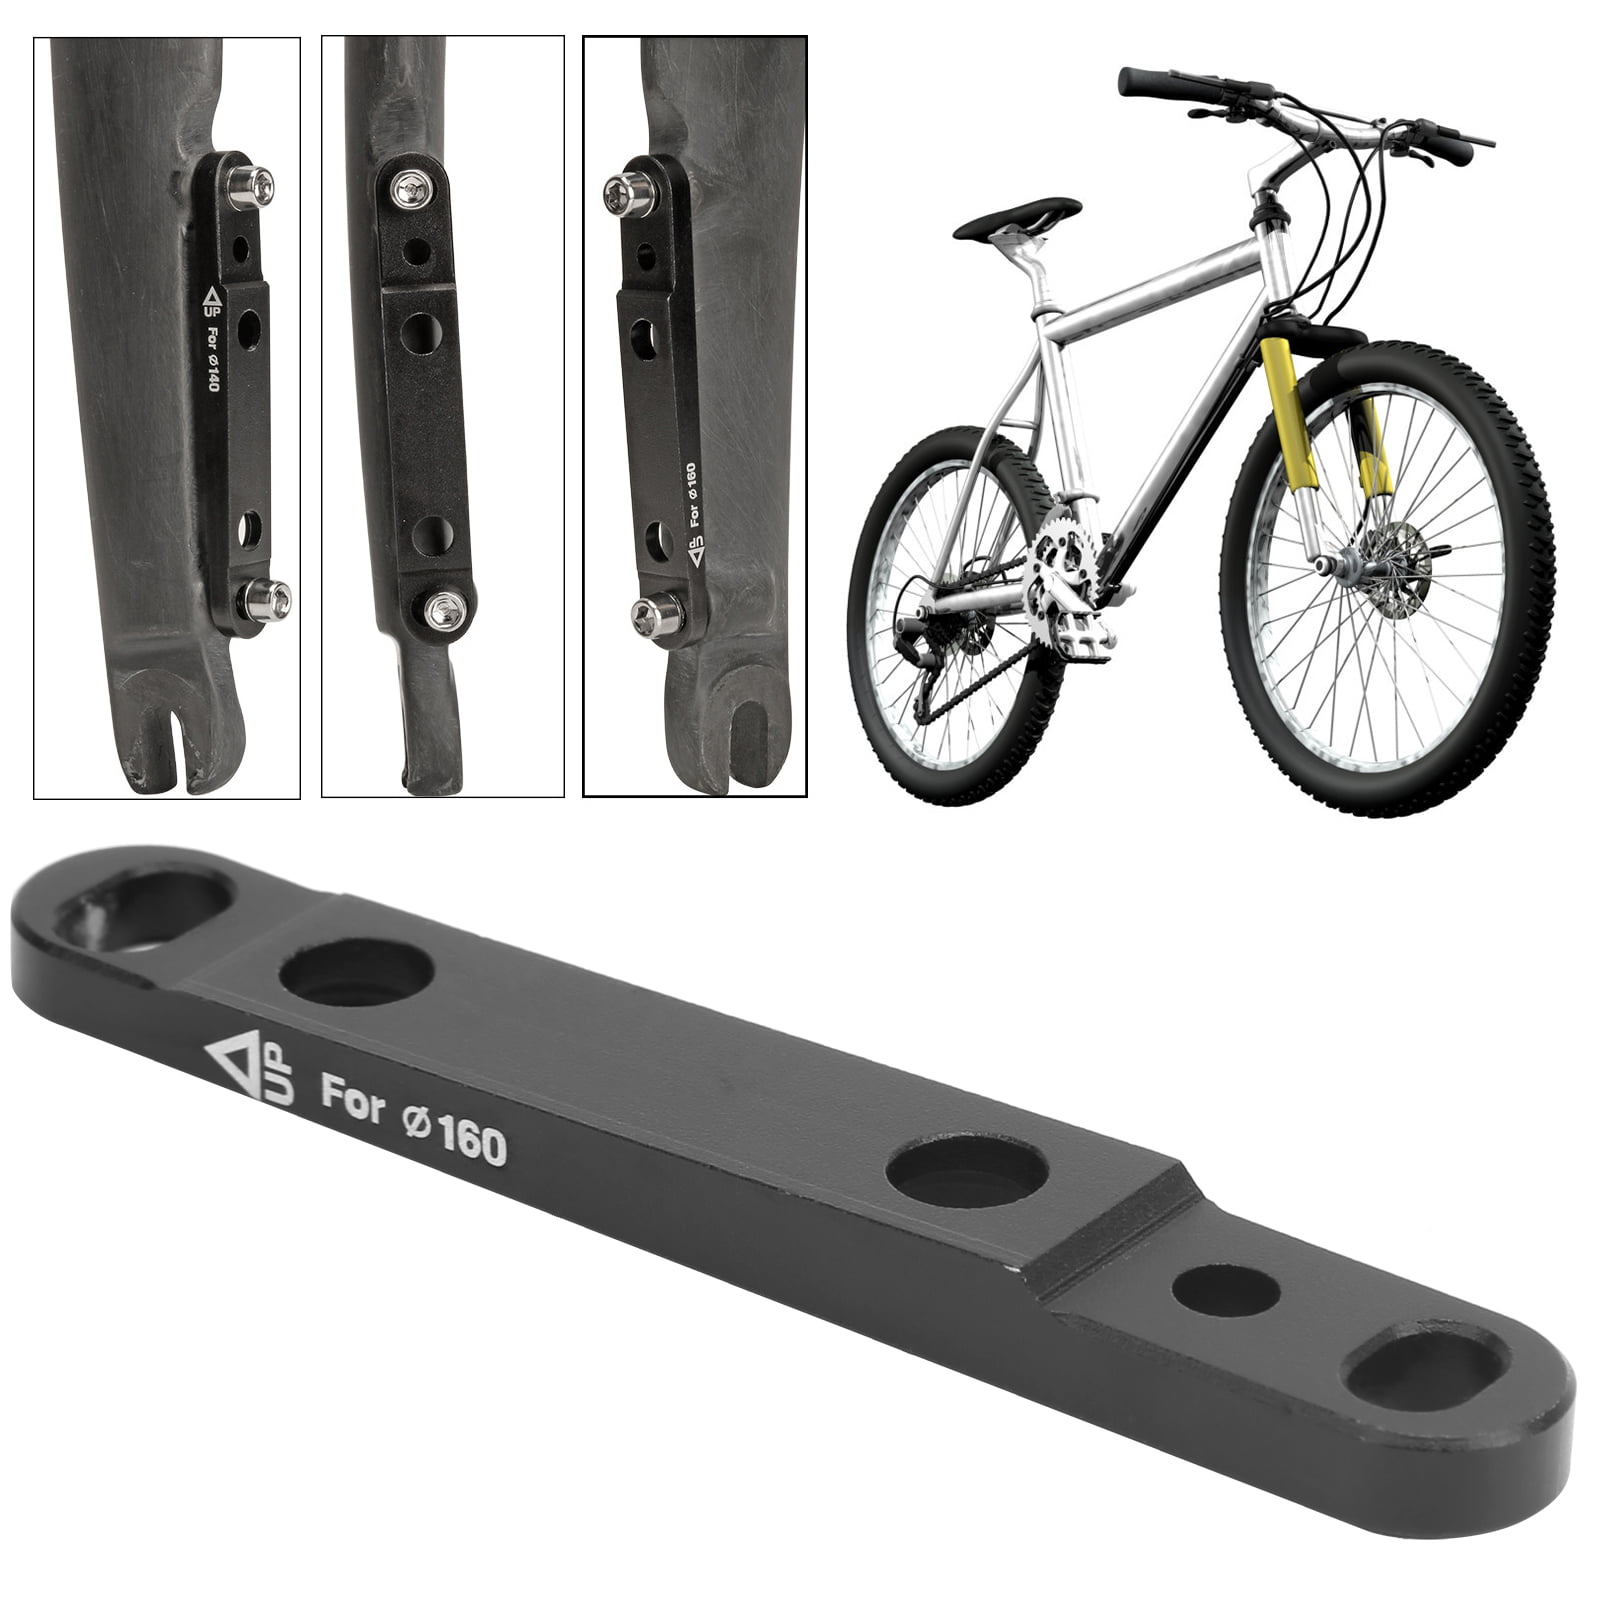 Disc Brake Adapter,Bike Front Fork Disc Brake Bracket Converter Mount Adapter 140mm/160mm Bicycle Accessory 